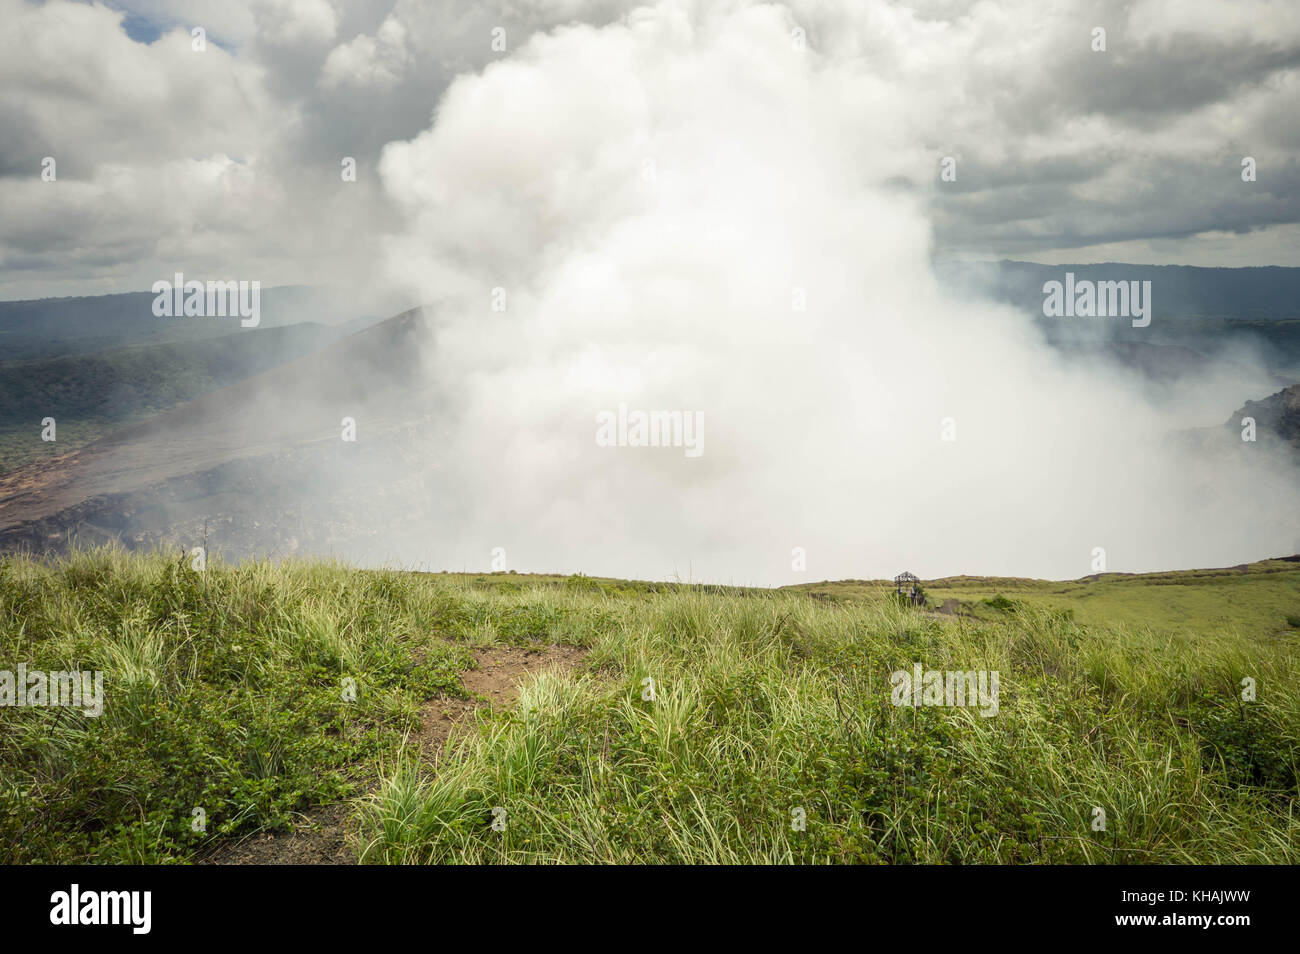 Sehr aktiv stark rauchender Krater des Vulkan Masaya Nindiri Duo in Nicaragua. Dramatische Himmel. Mittelamerika Stockfoto